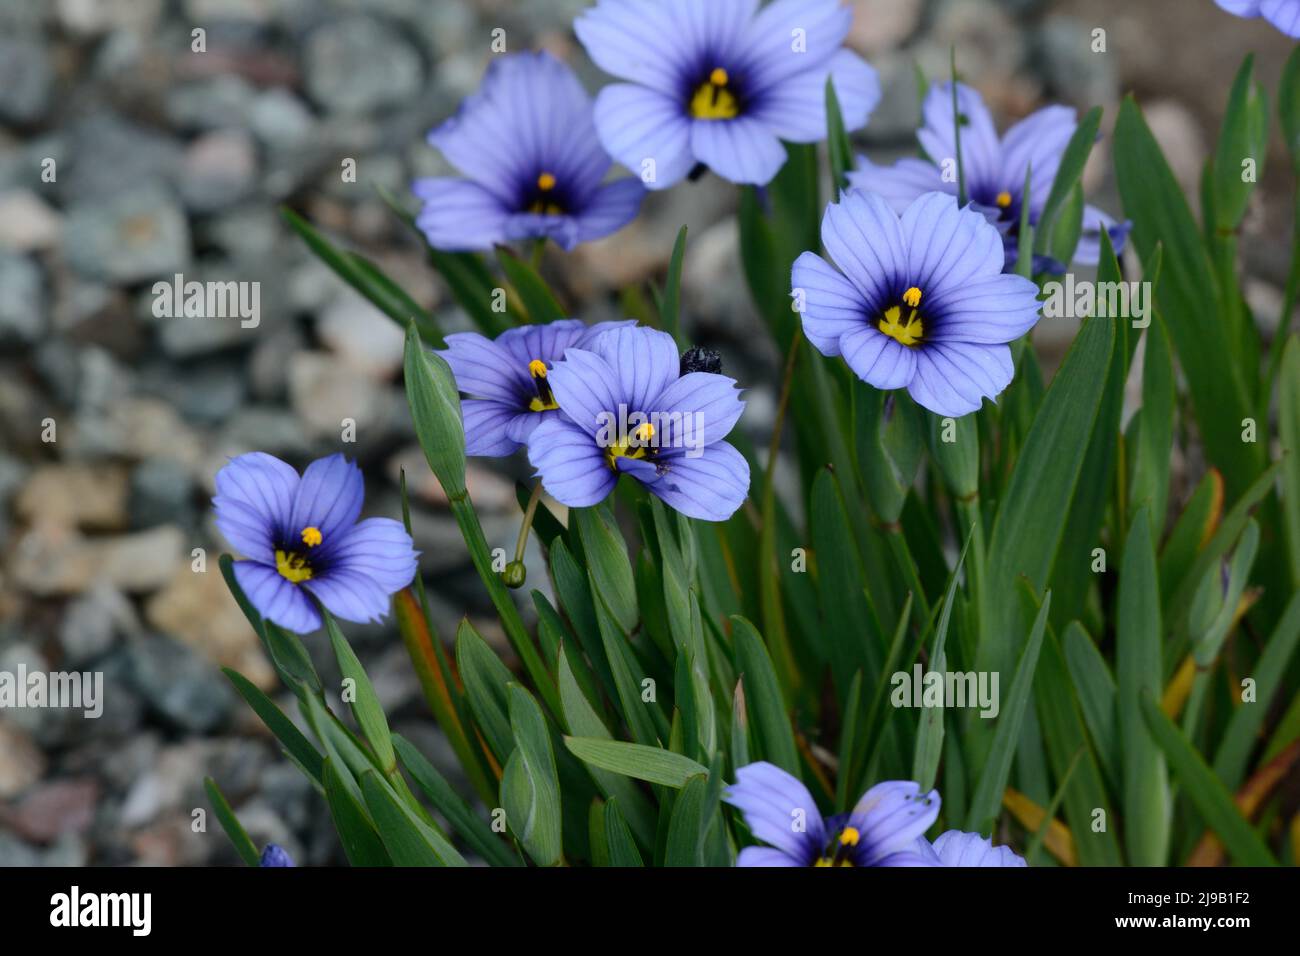 Sisyrinchium Devon Skies Blue eyed grass flowers blue flowers with dark blue throat and yellow eye Stock Photo